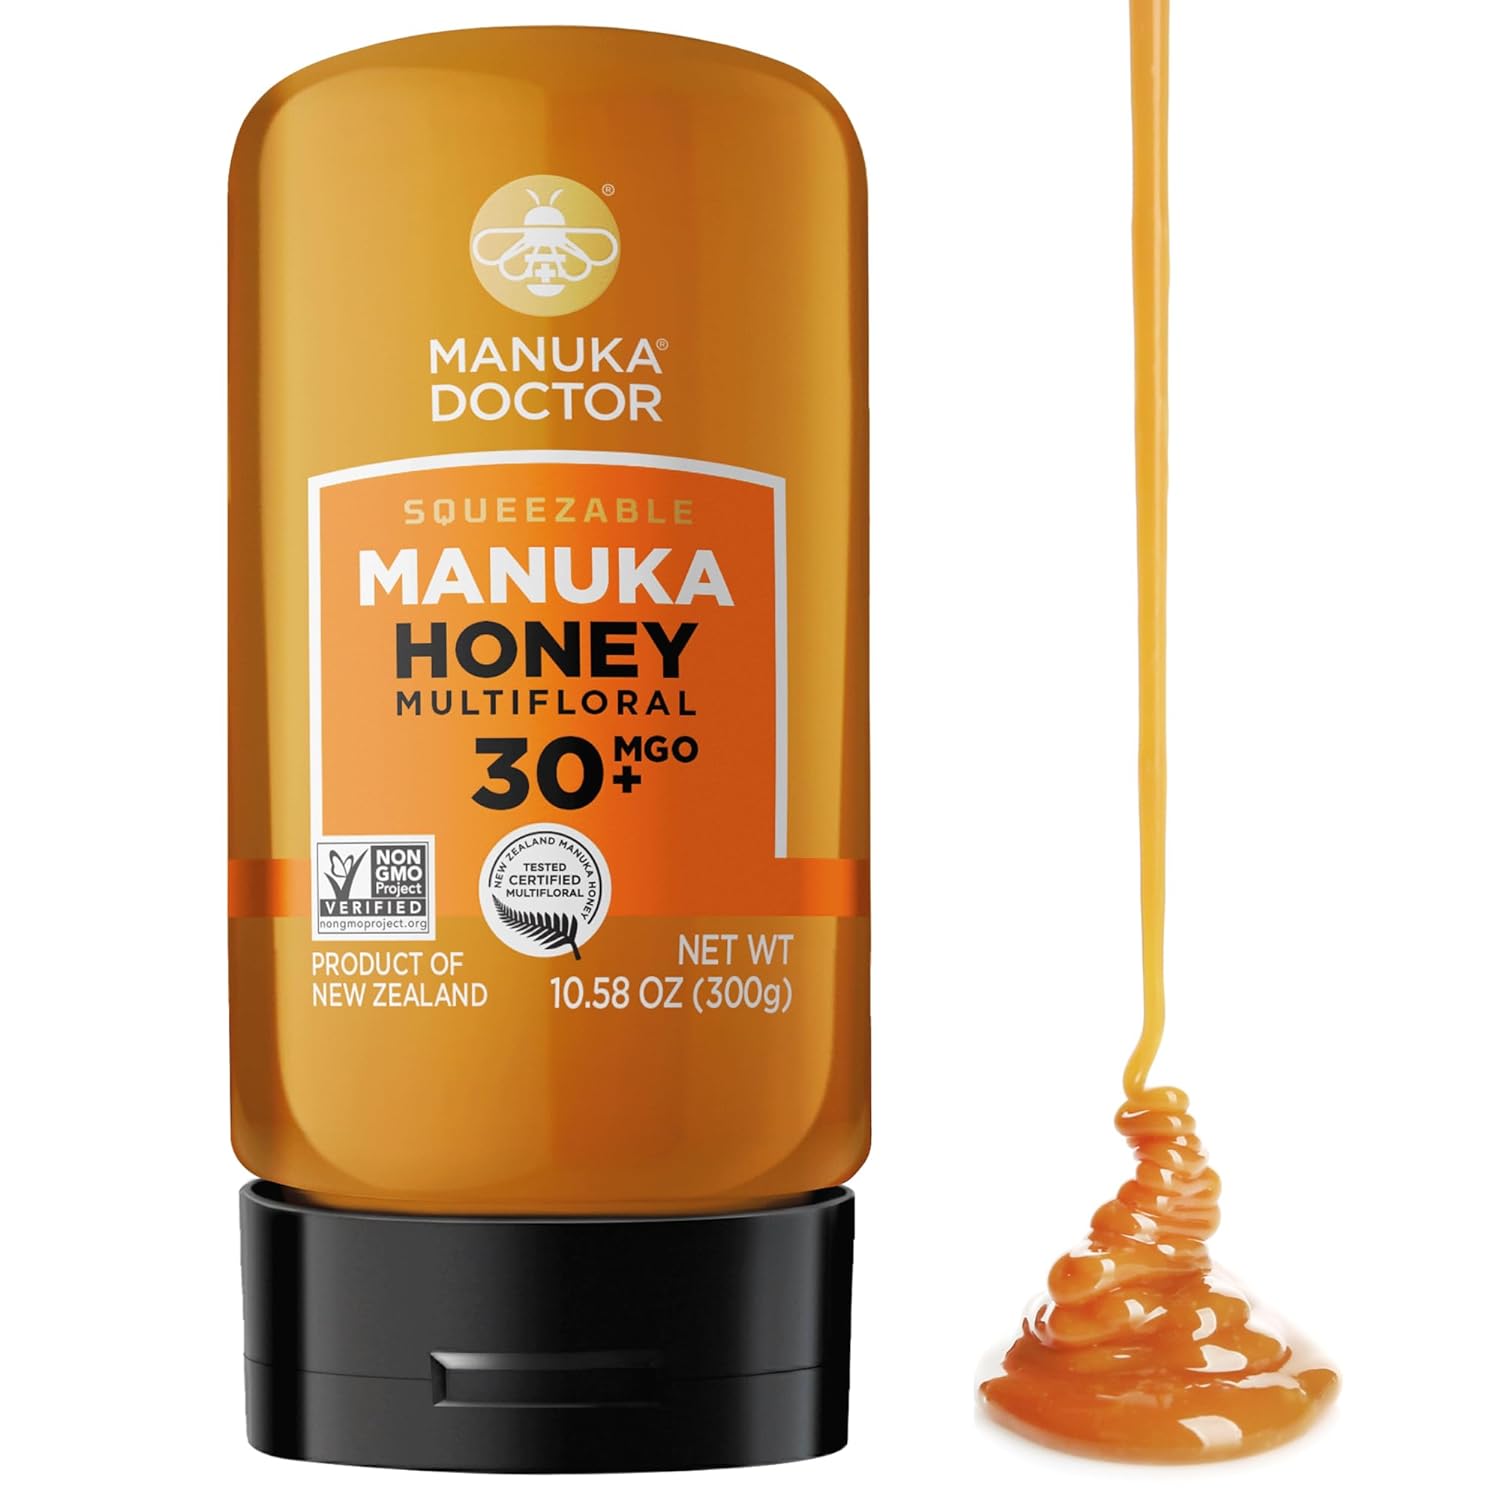 MANUKA DOCTOR – MGO 30+ SQUEEZY Manuka Honey Multifloral